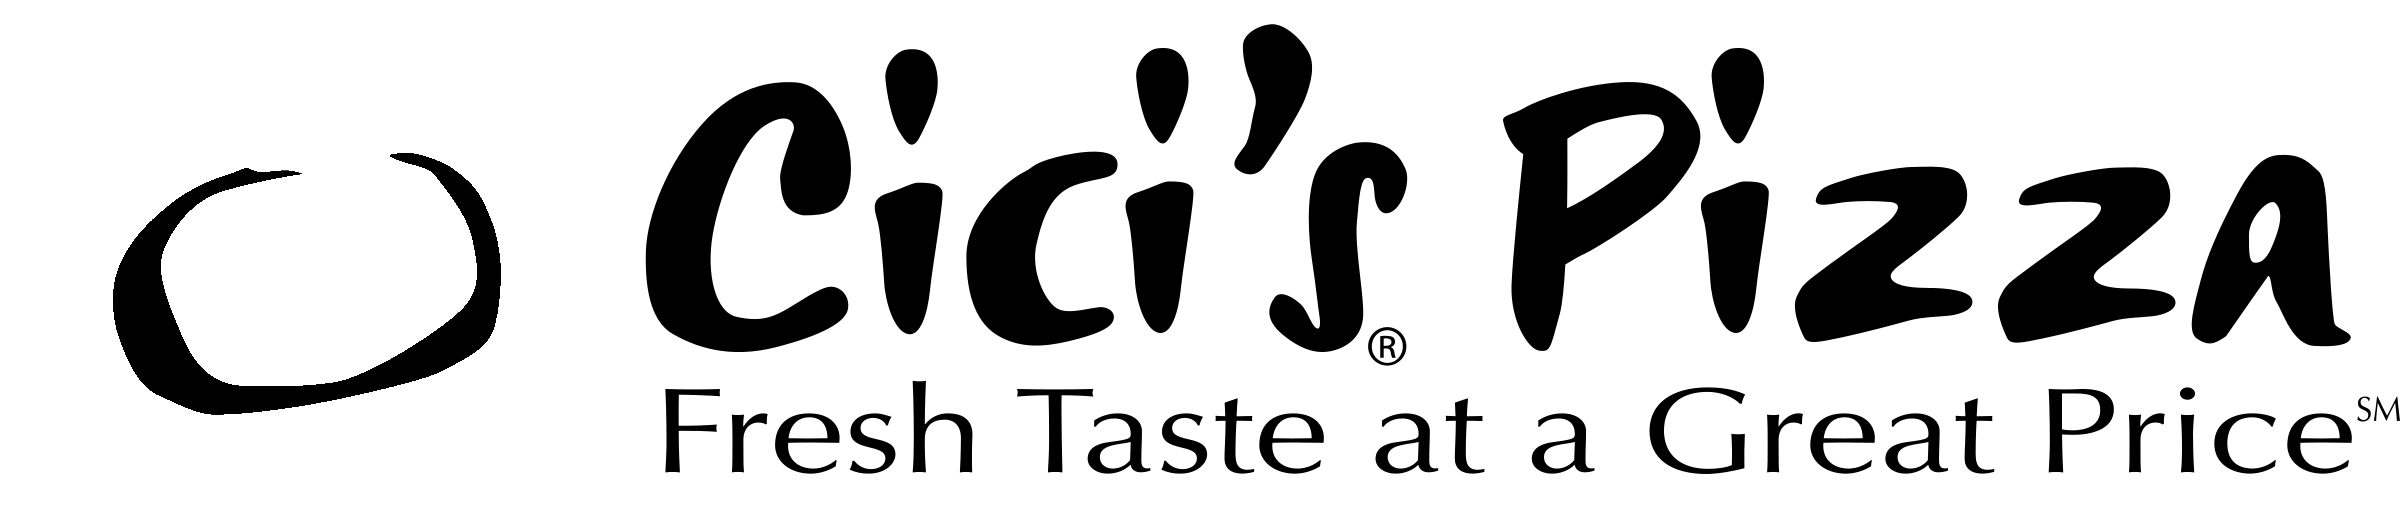 Cici's Logo - Cici's Pizza Logo PNG Transparent & SVG Vector - Freebie Supply